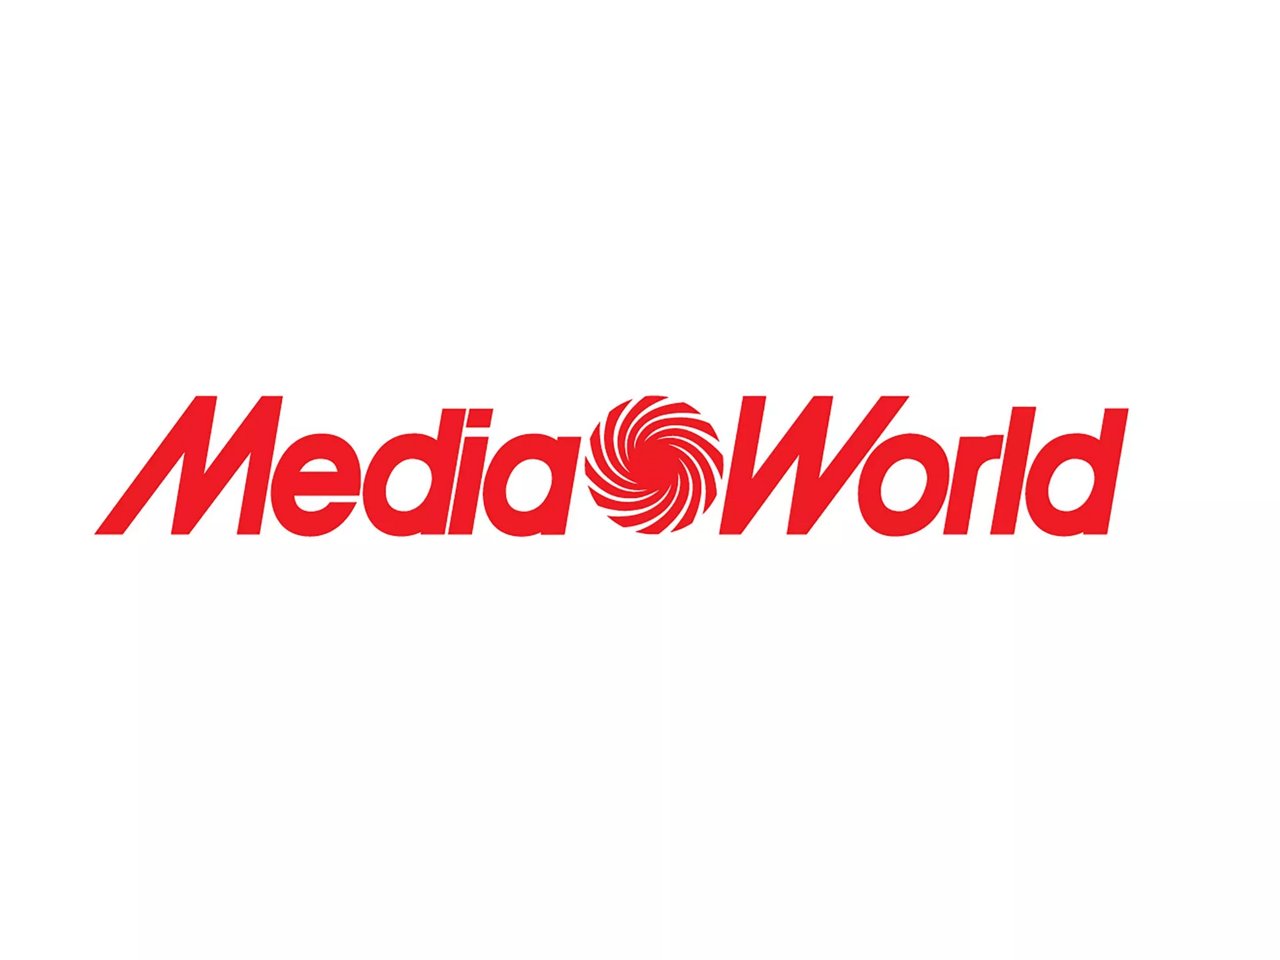 Mediaworld: digital transformation of a brand 